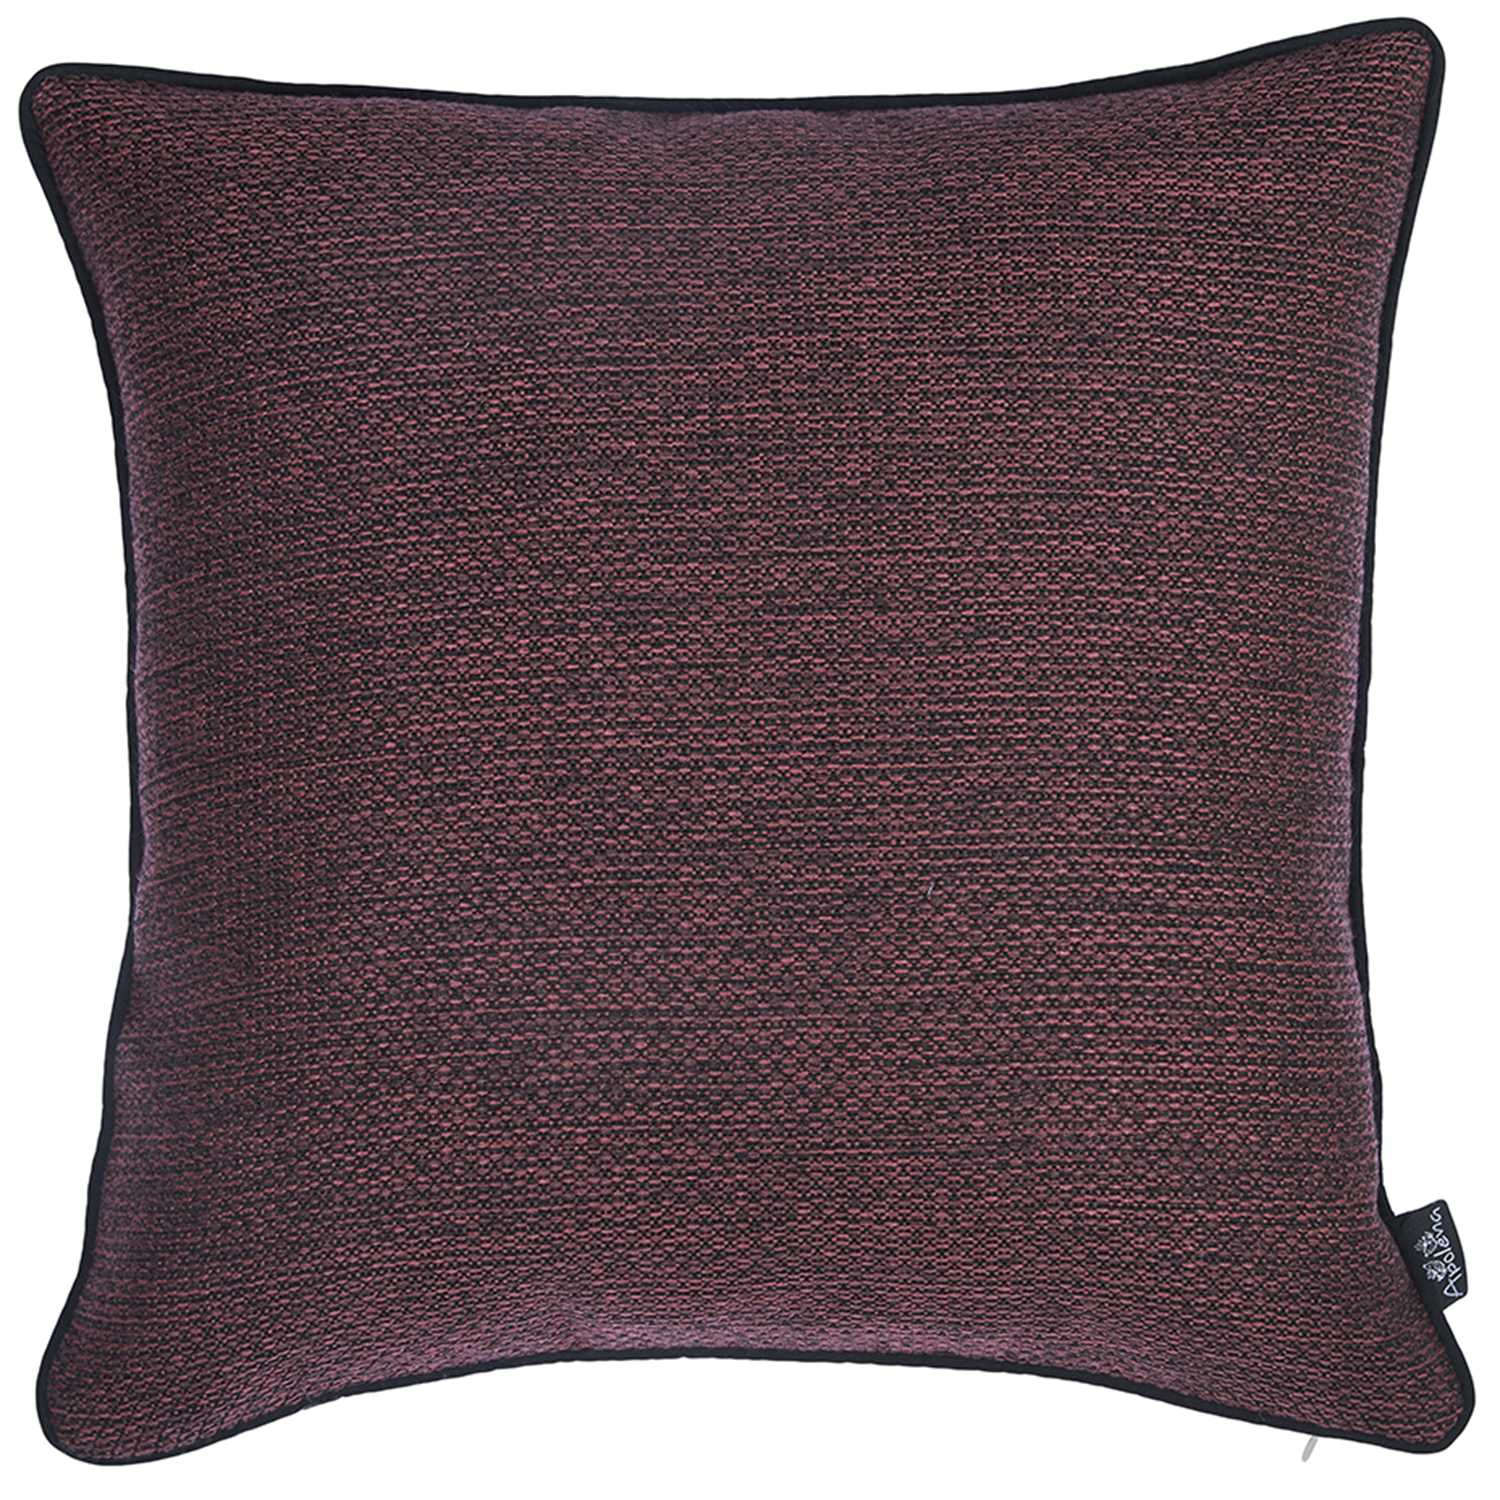 17"X 17" Jacquard Minimal Decorative Throw Pillow Cover